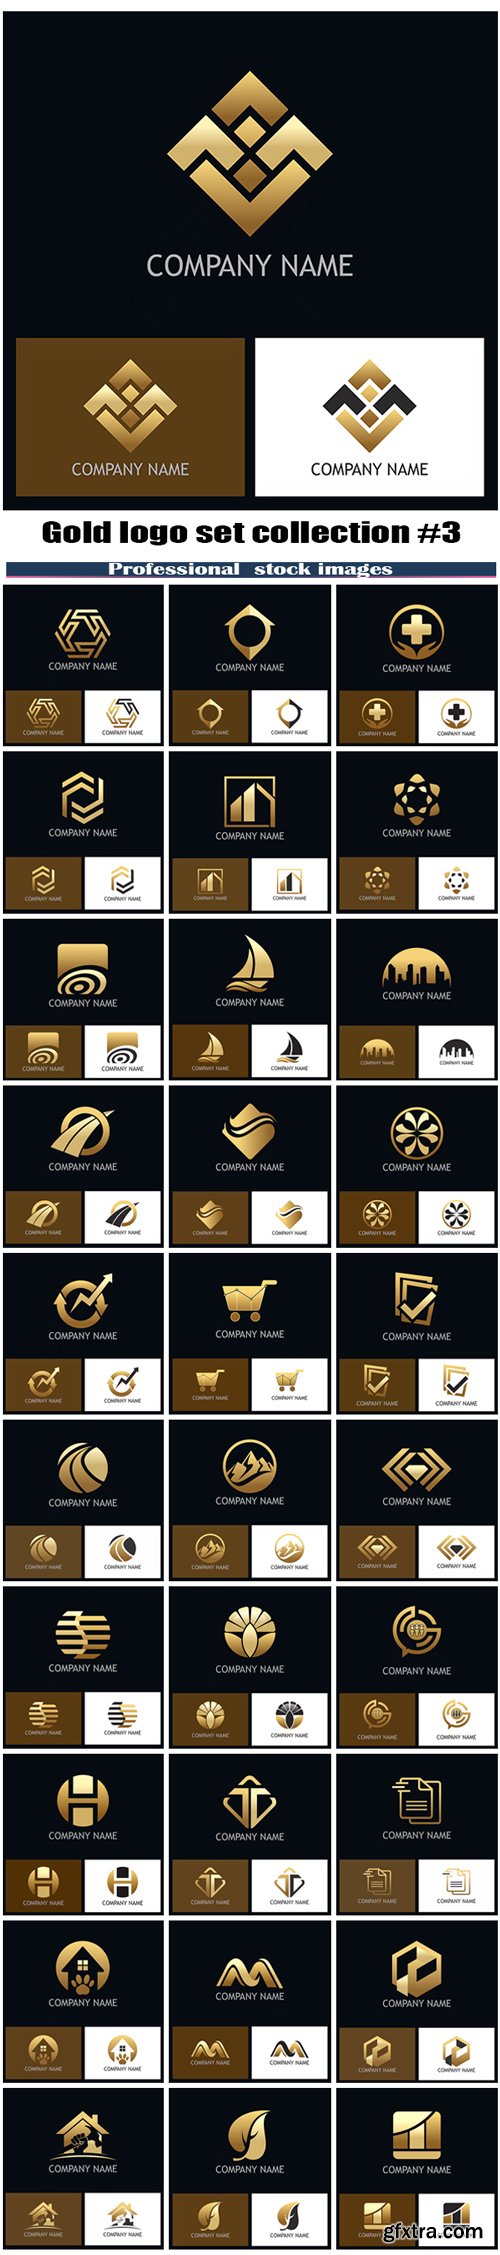 Gold logo set collection #3